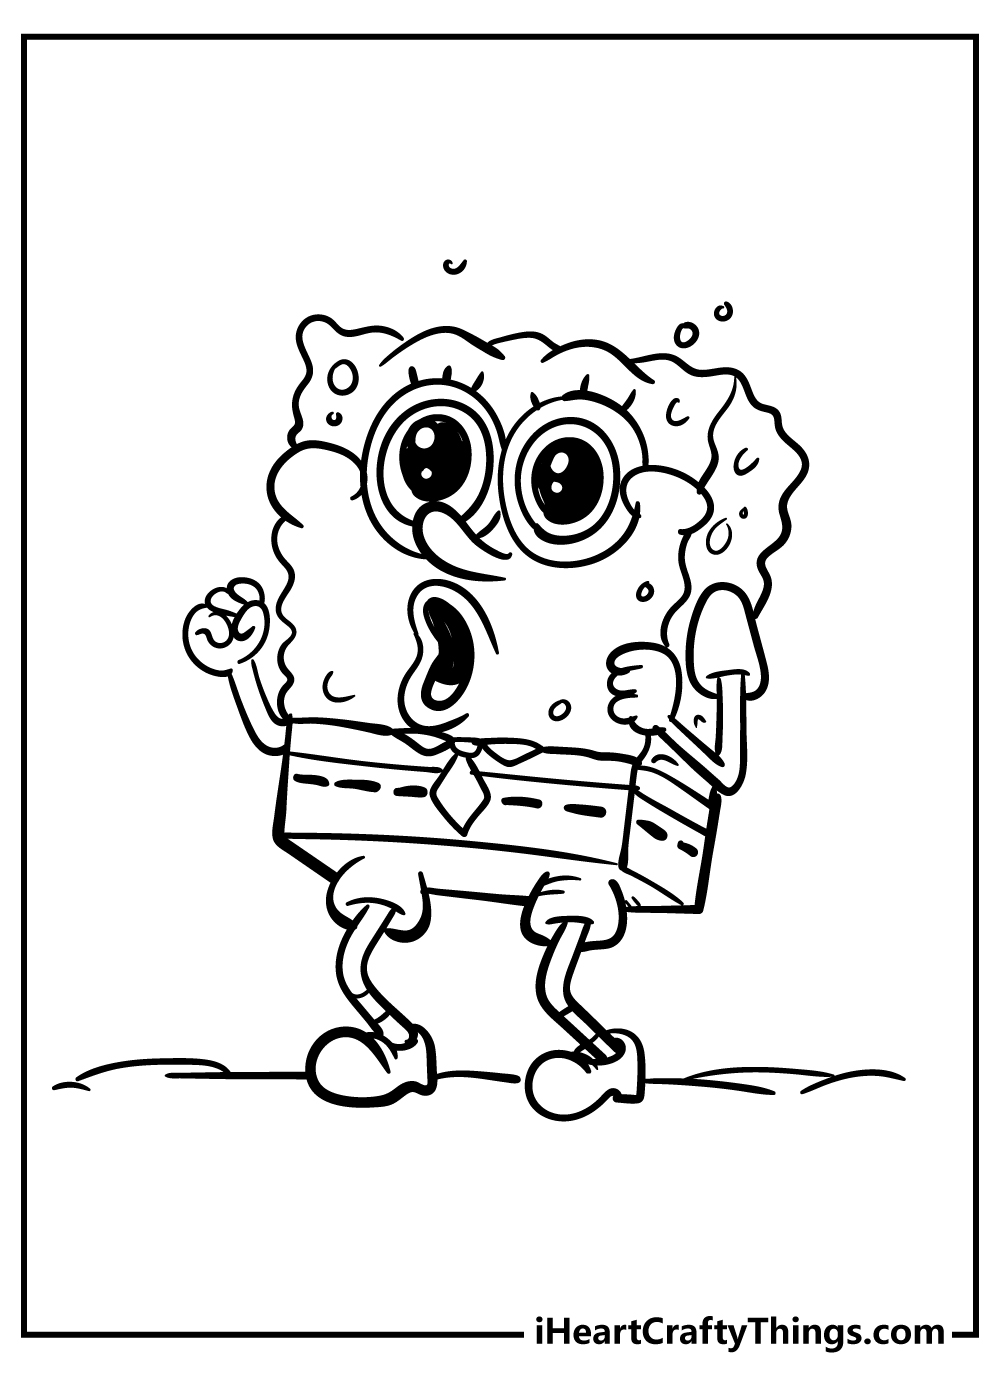 Sponge Bob coloring pages free printable